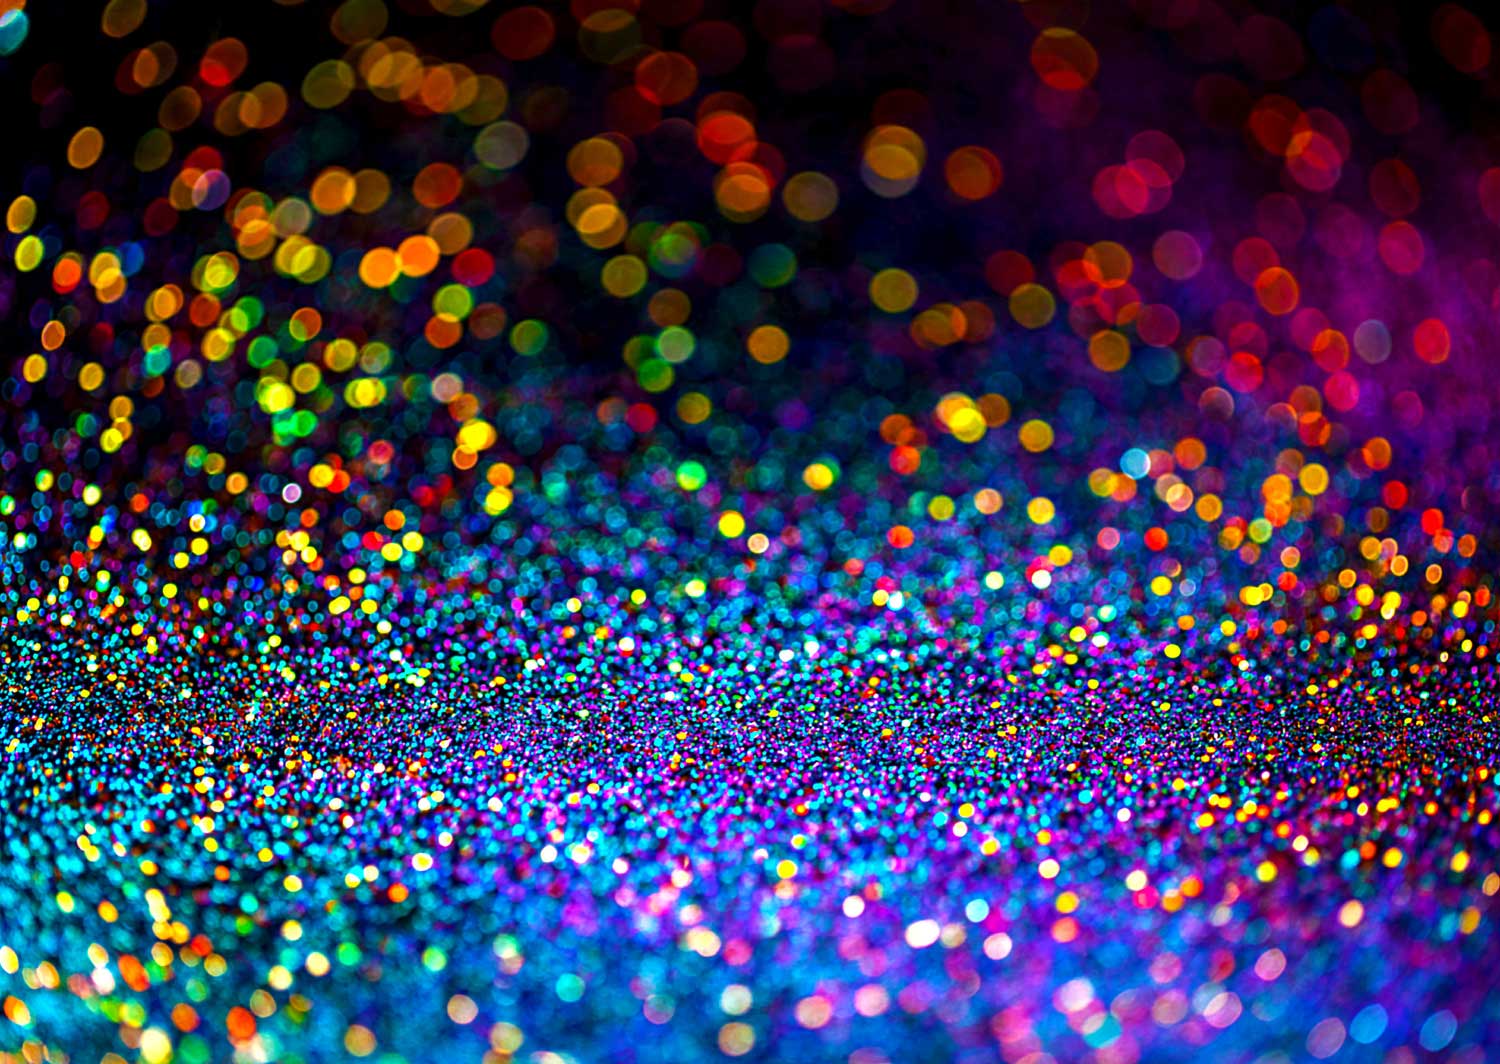 Puzzle Enjoy com glitter multicolorido 1000 peças